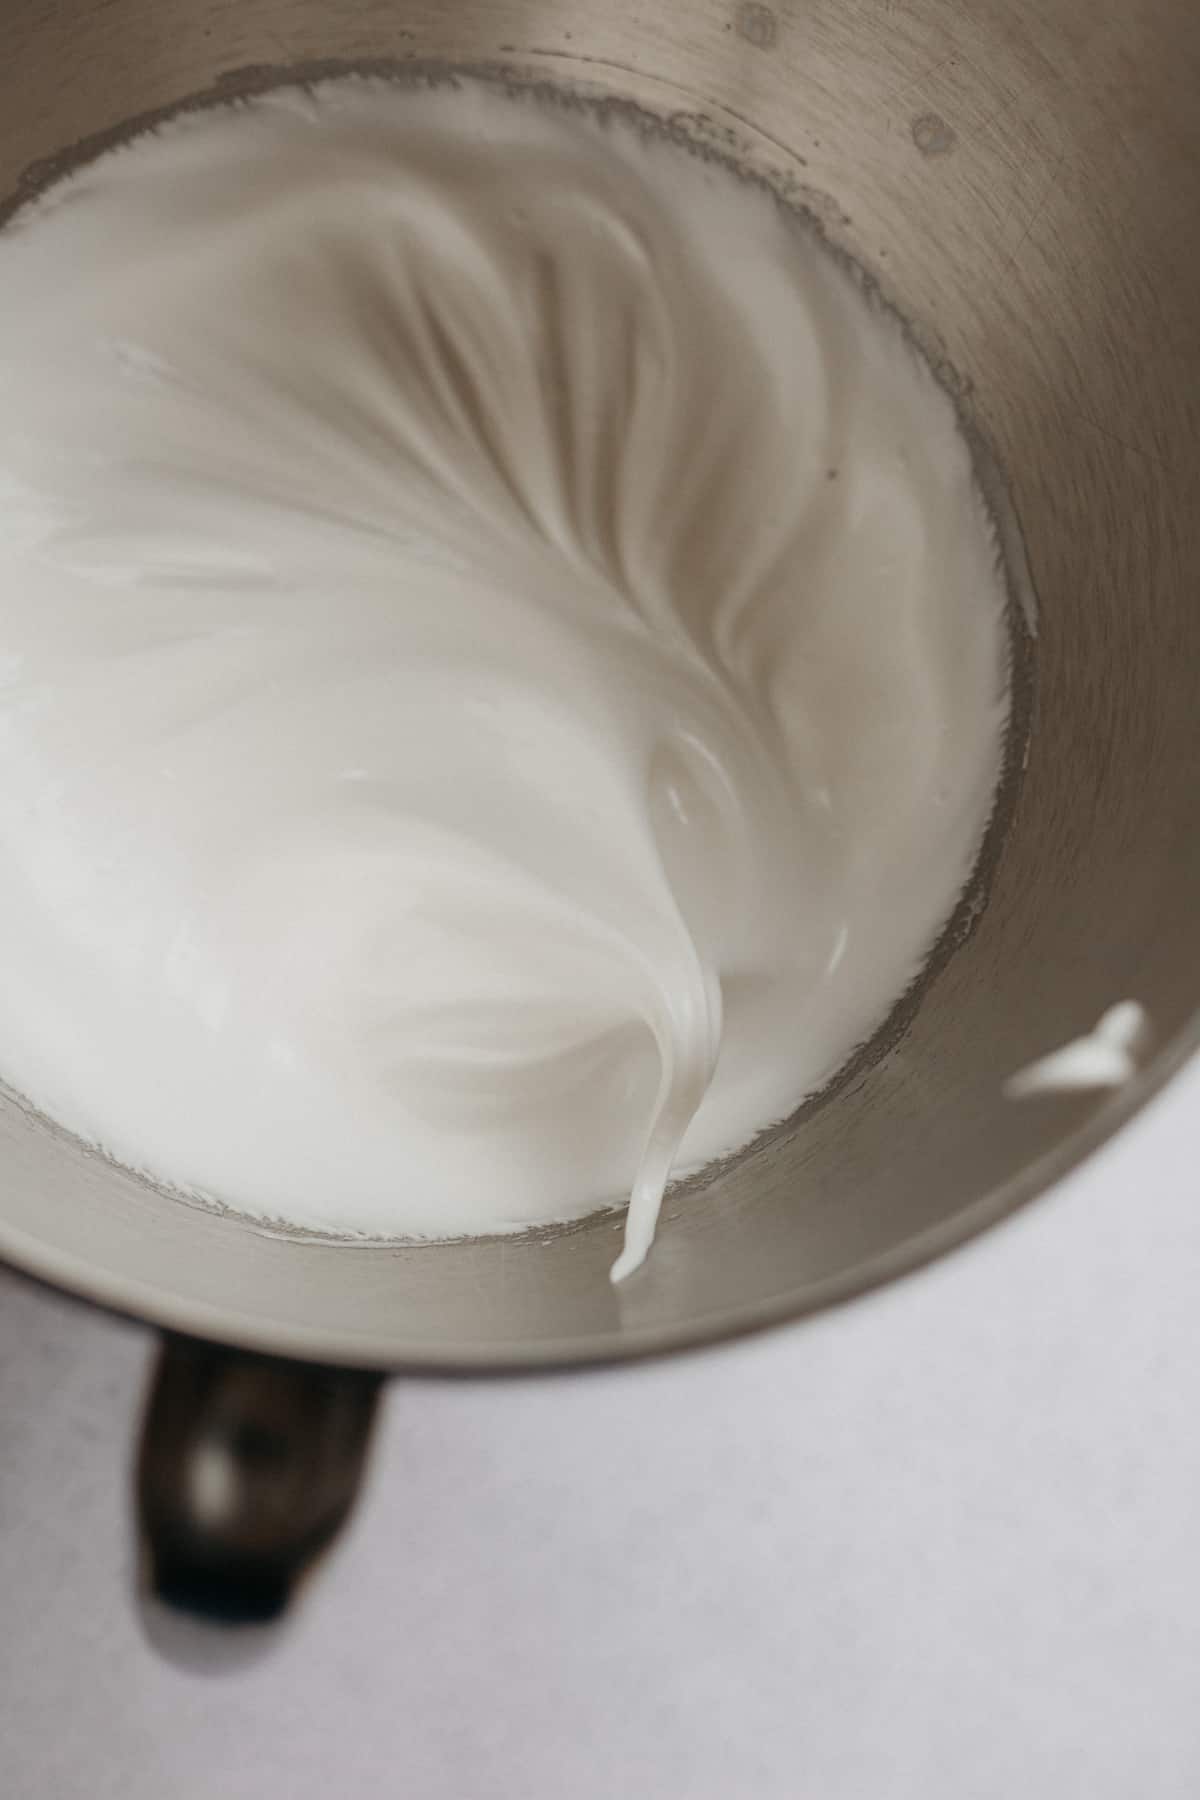 white swiss meringue with a stiff peak in a silver bowl